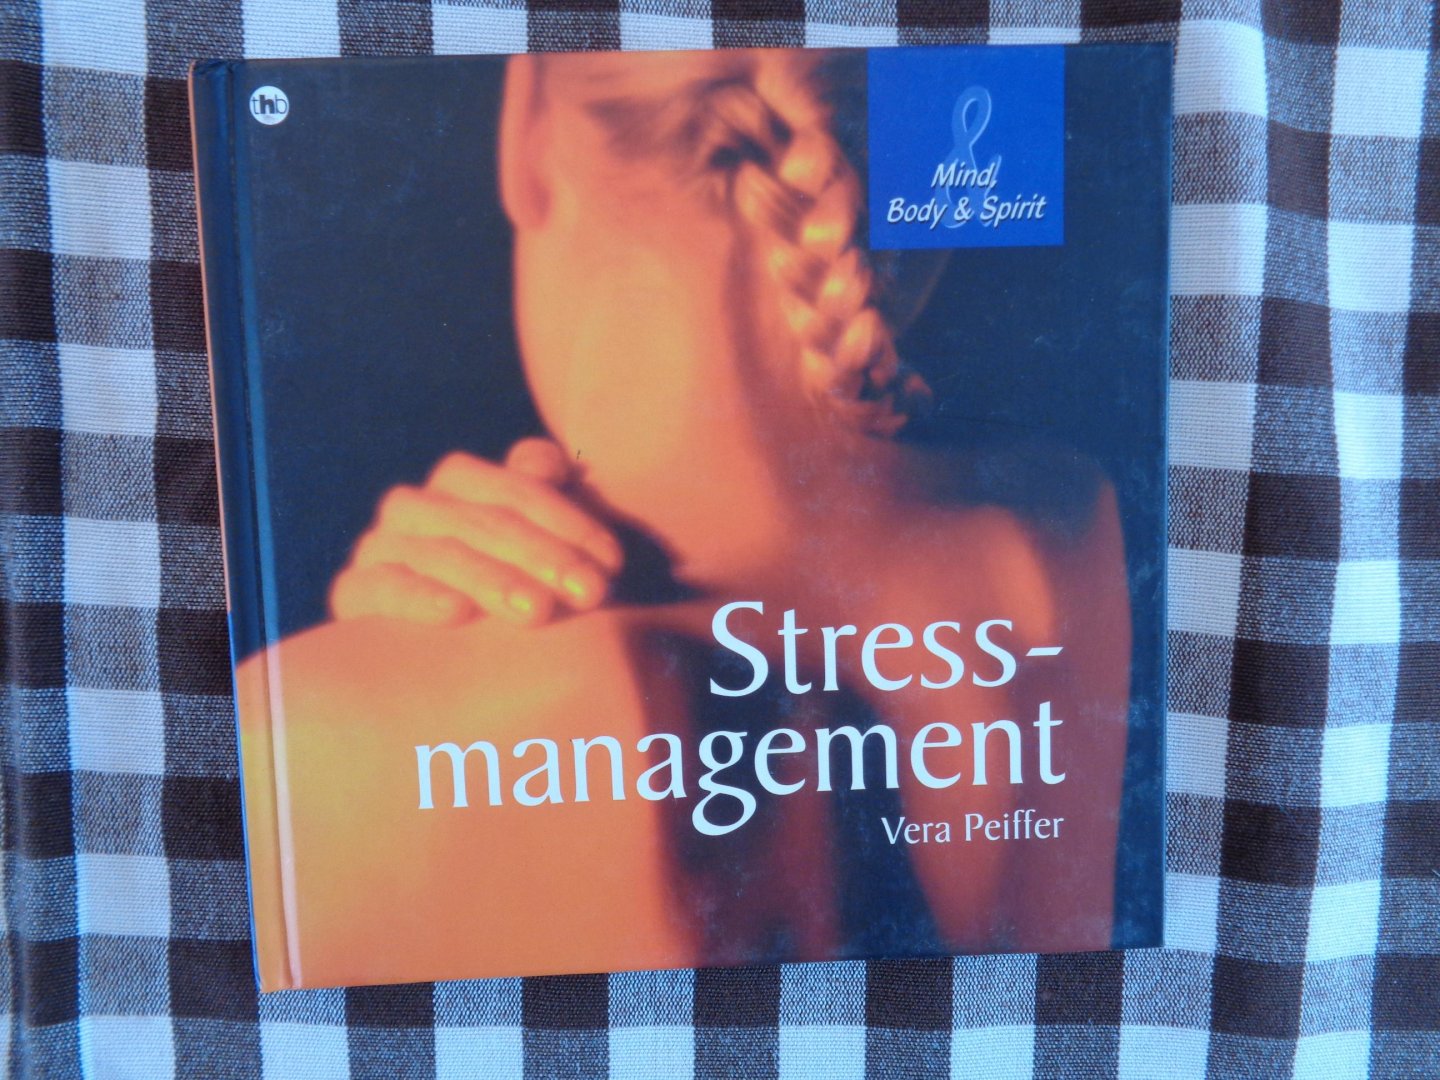 vera peiffer - stressmagement